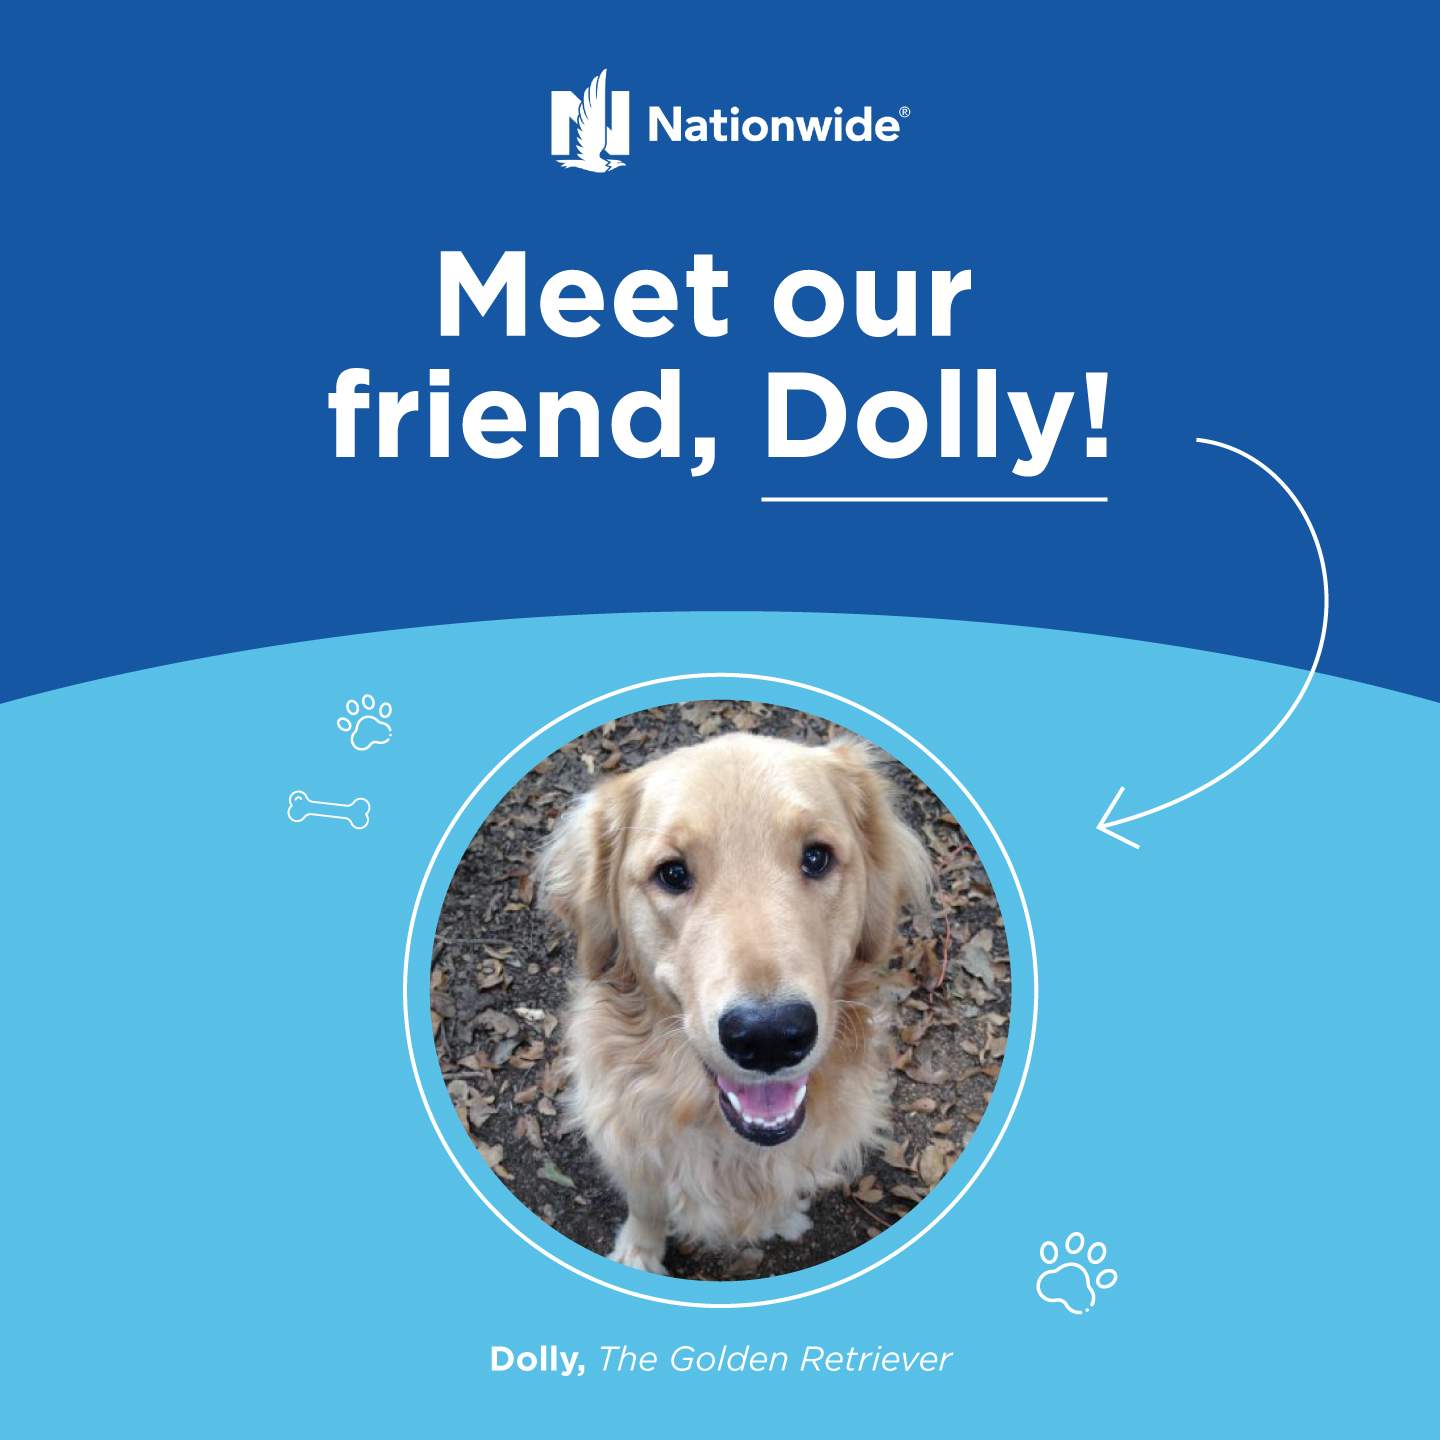 Meet our friend, Dolly!